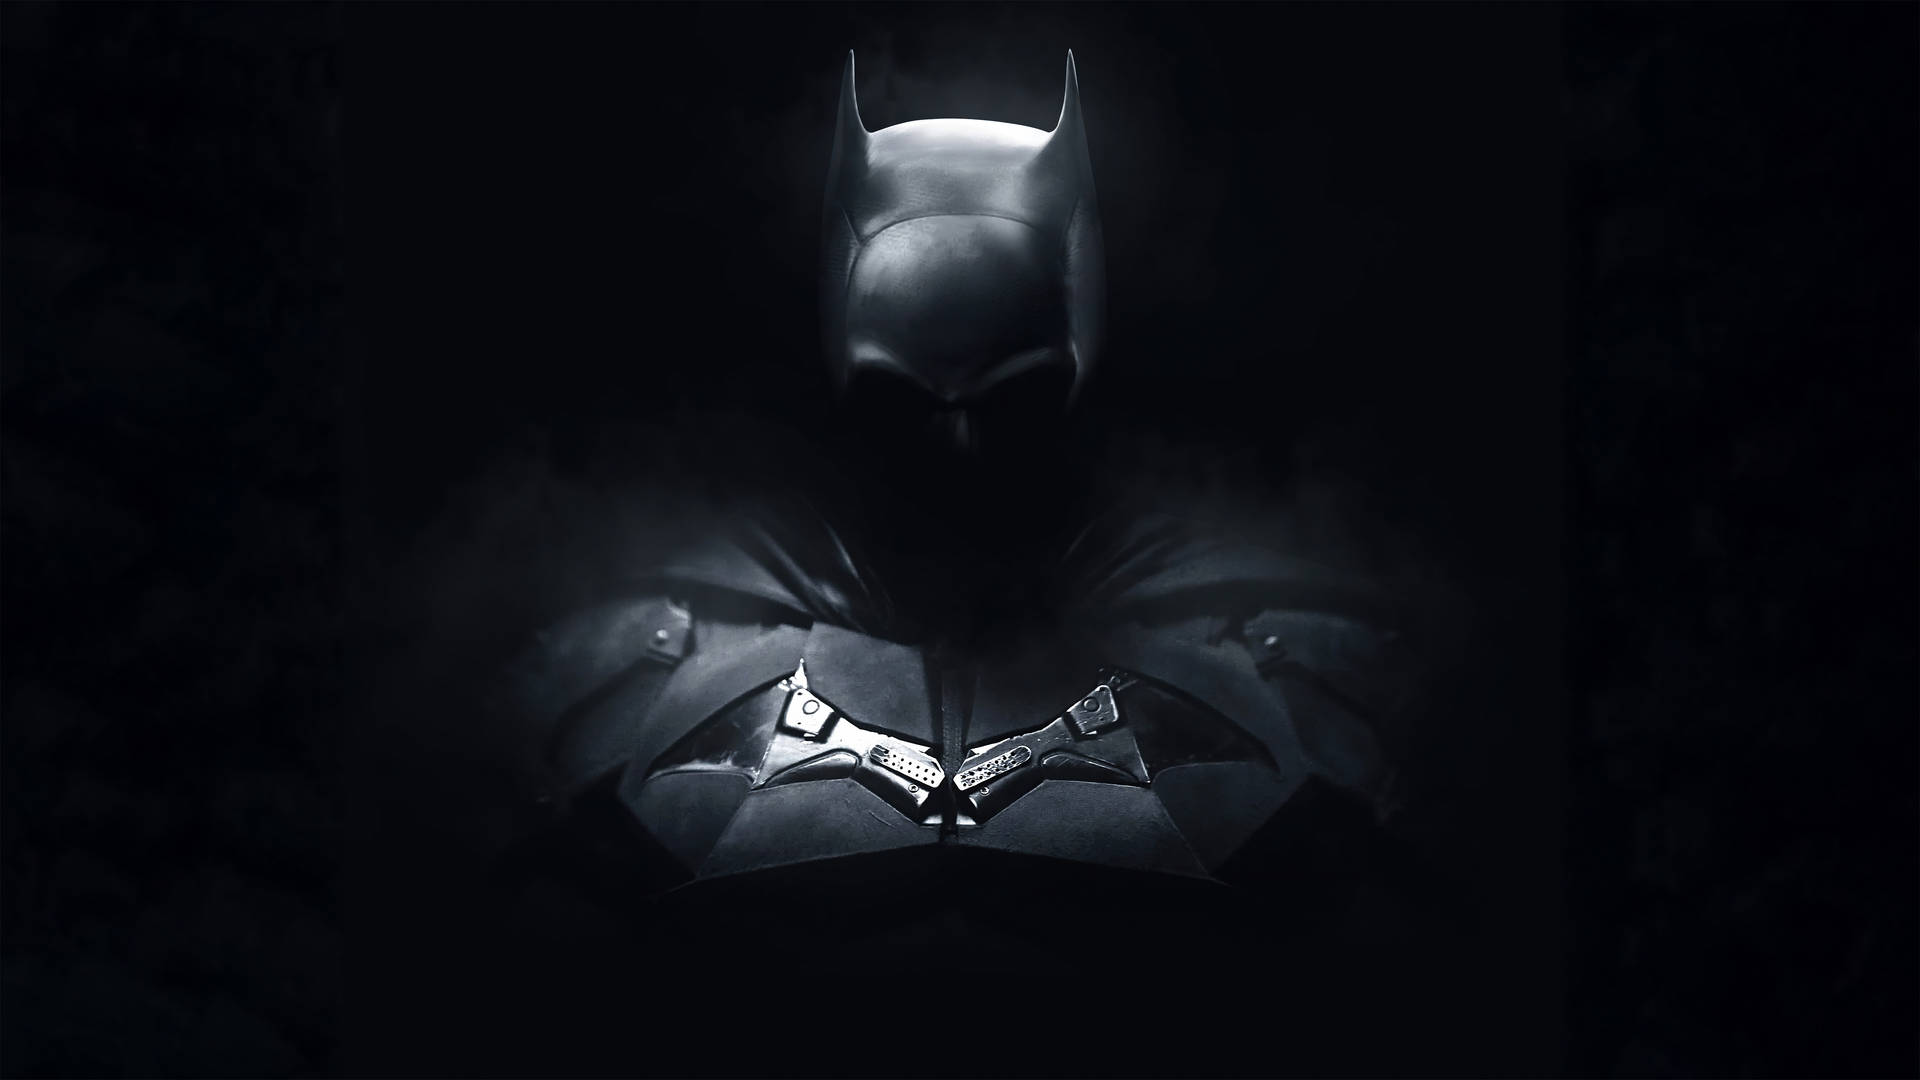 The Batman Silhouette Background